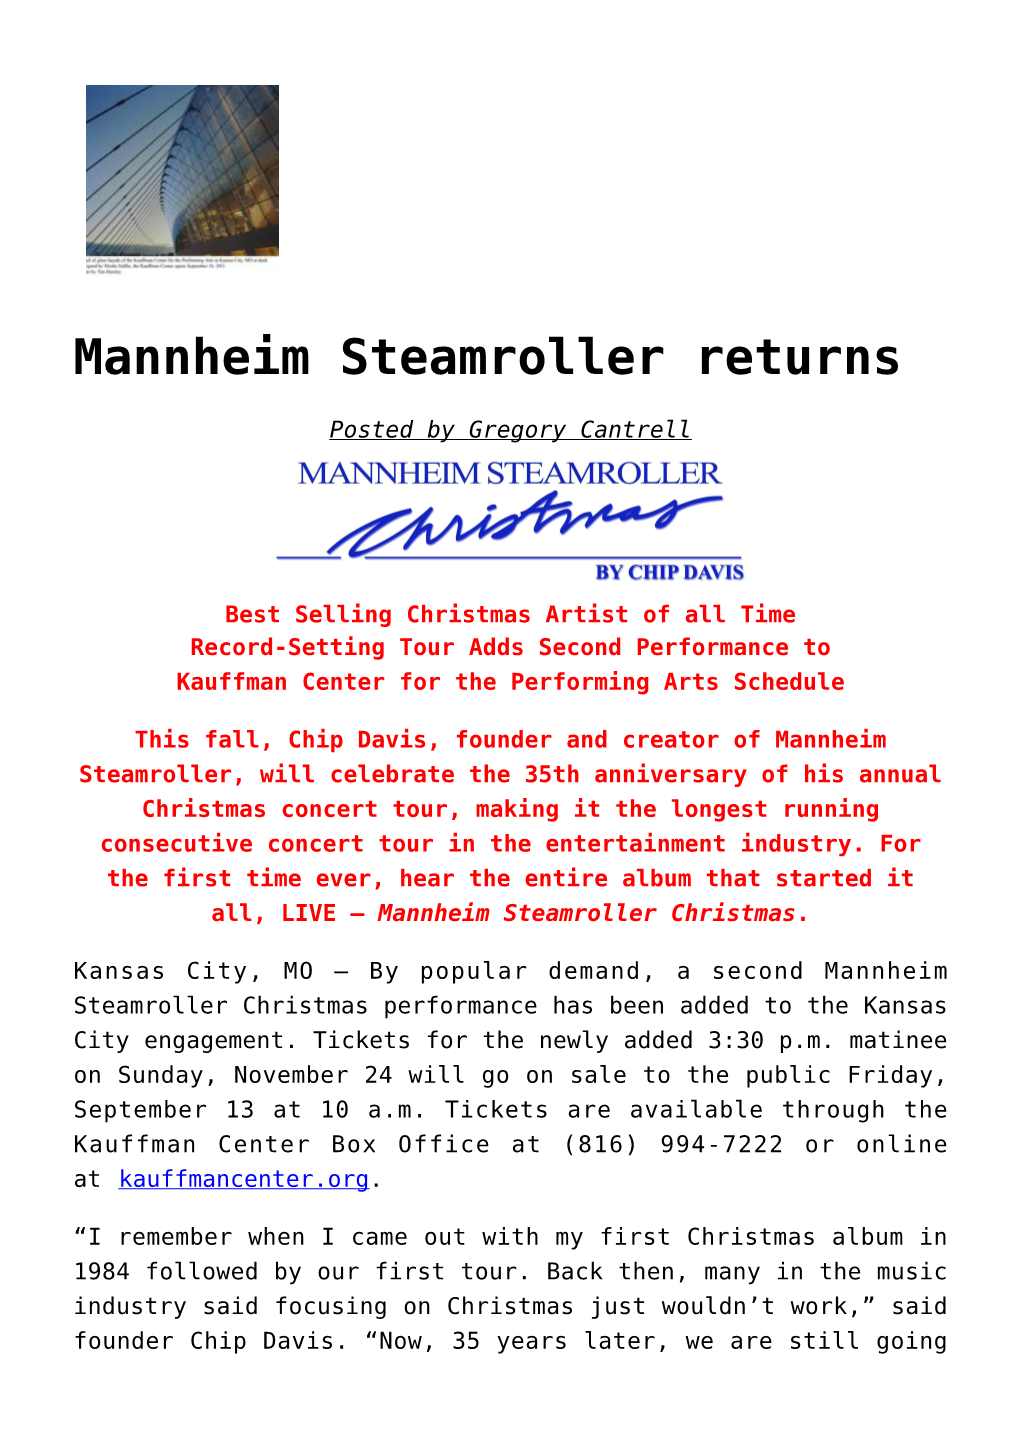 Mannheim Steamroller Returns